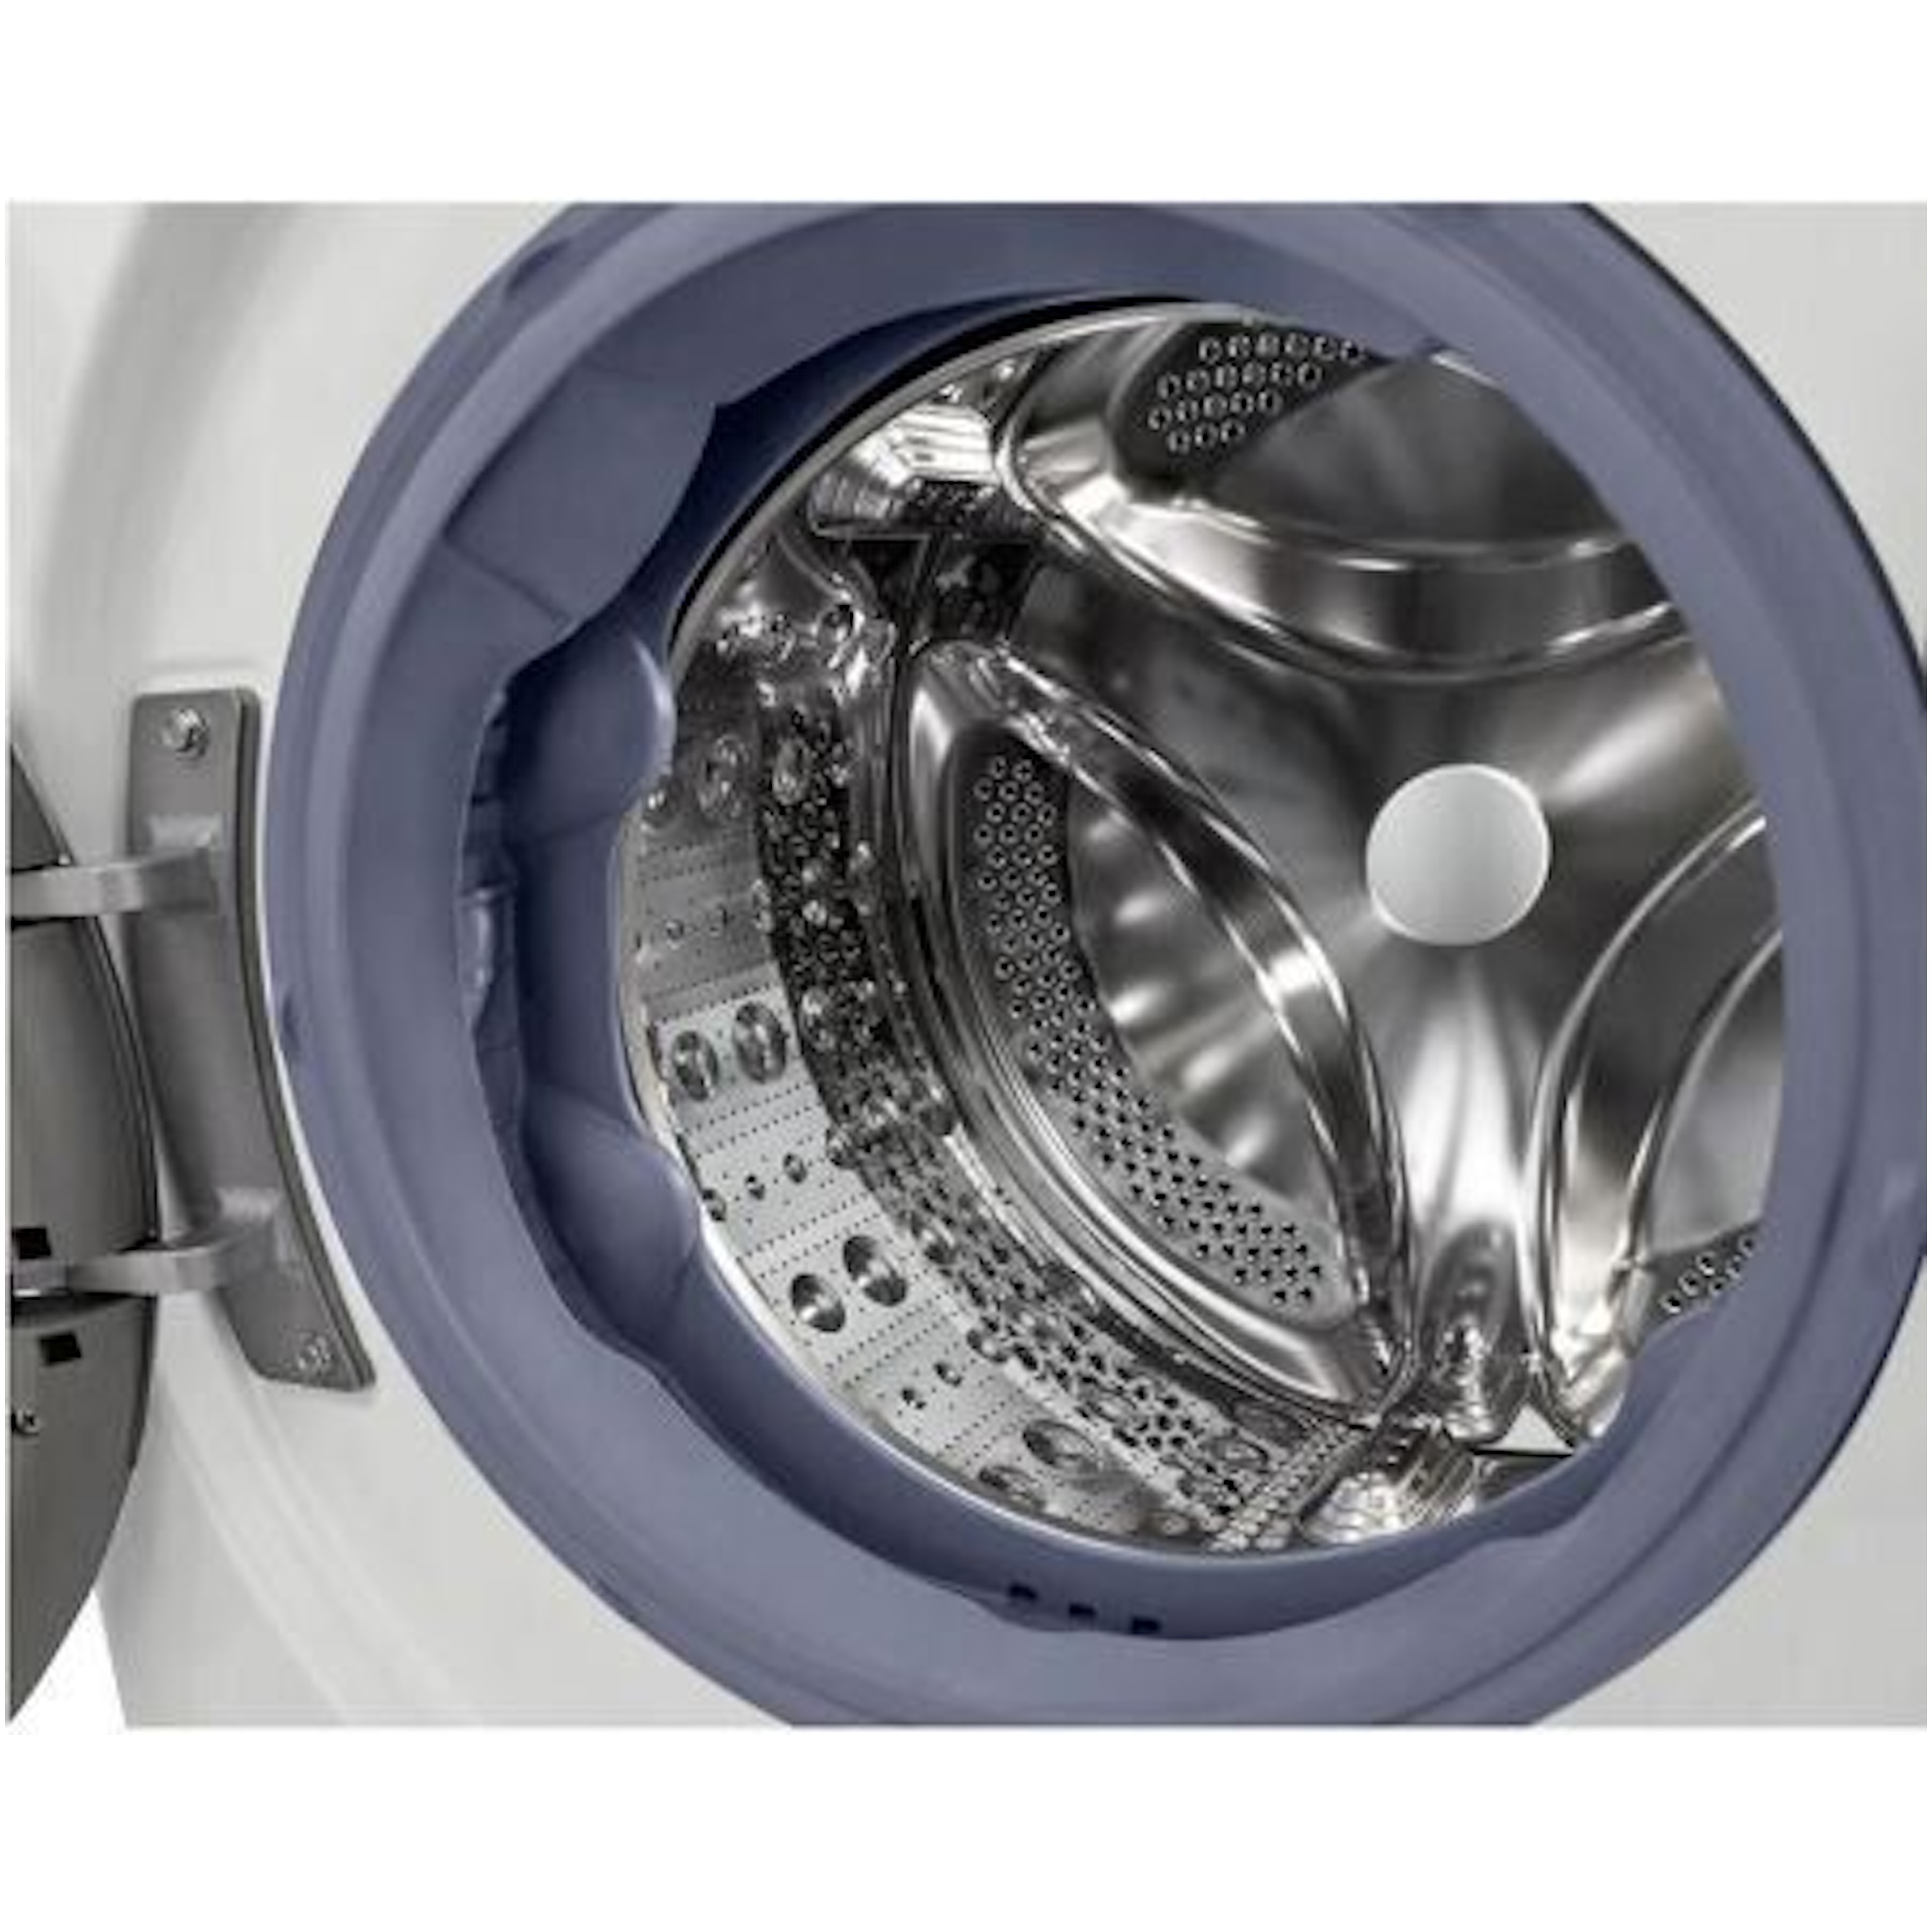 LG wasmachine GC3V508S1 afbeelding 3